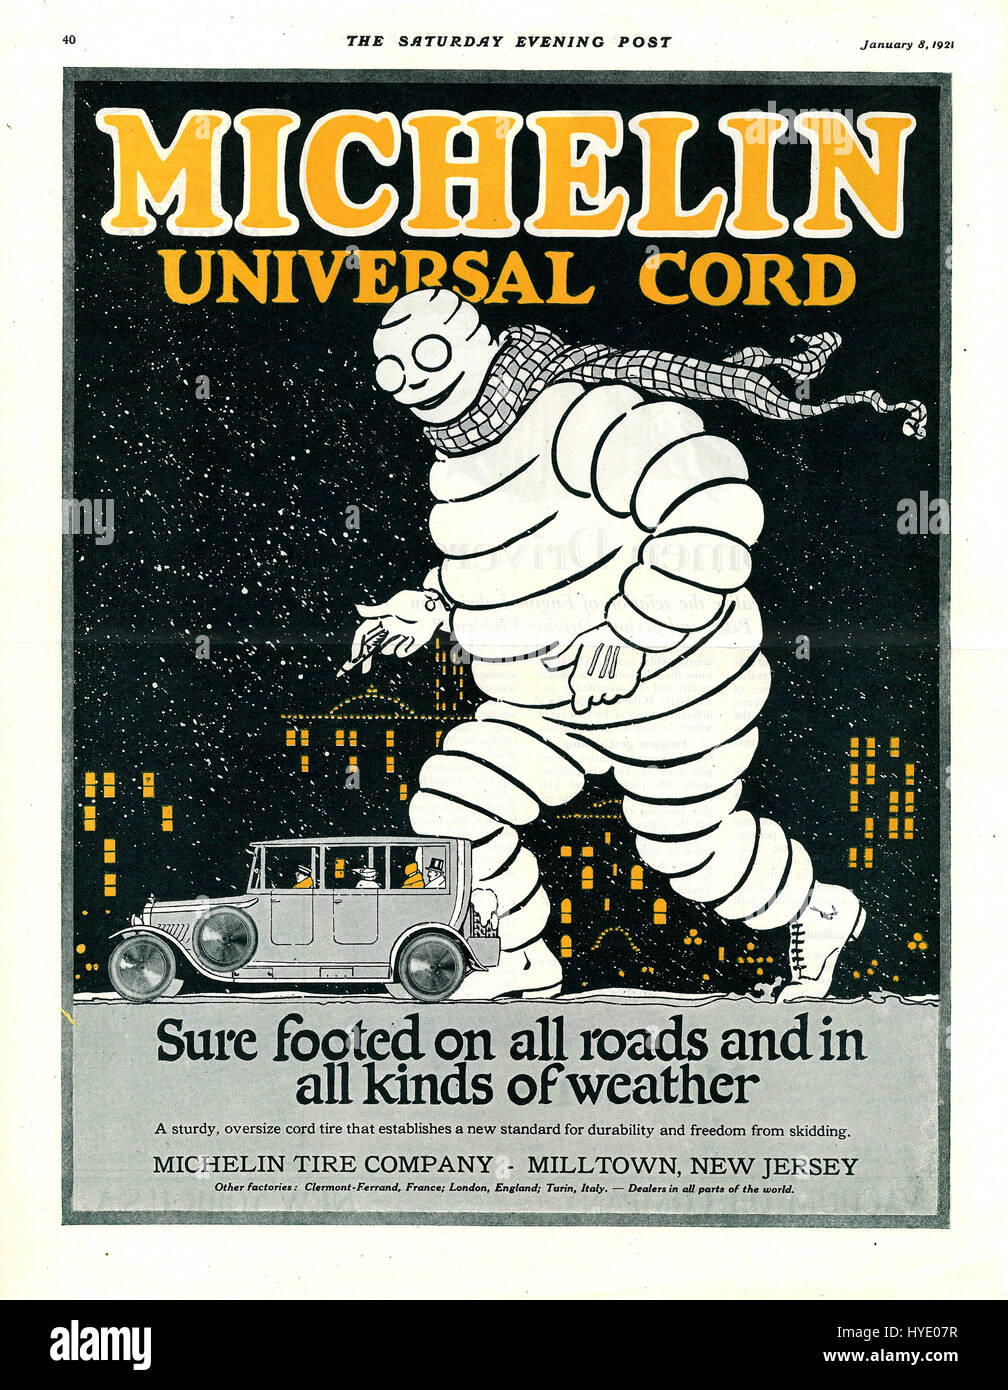 Michelin Reifen MICHELIN MANN Firma New Jersey USA 8. Januar 1921 "Saturday Evening Post" Anzeige Stockfoto